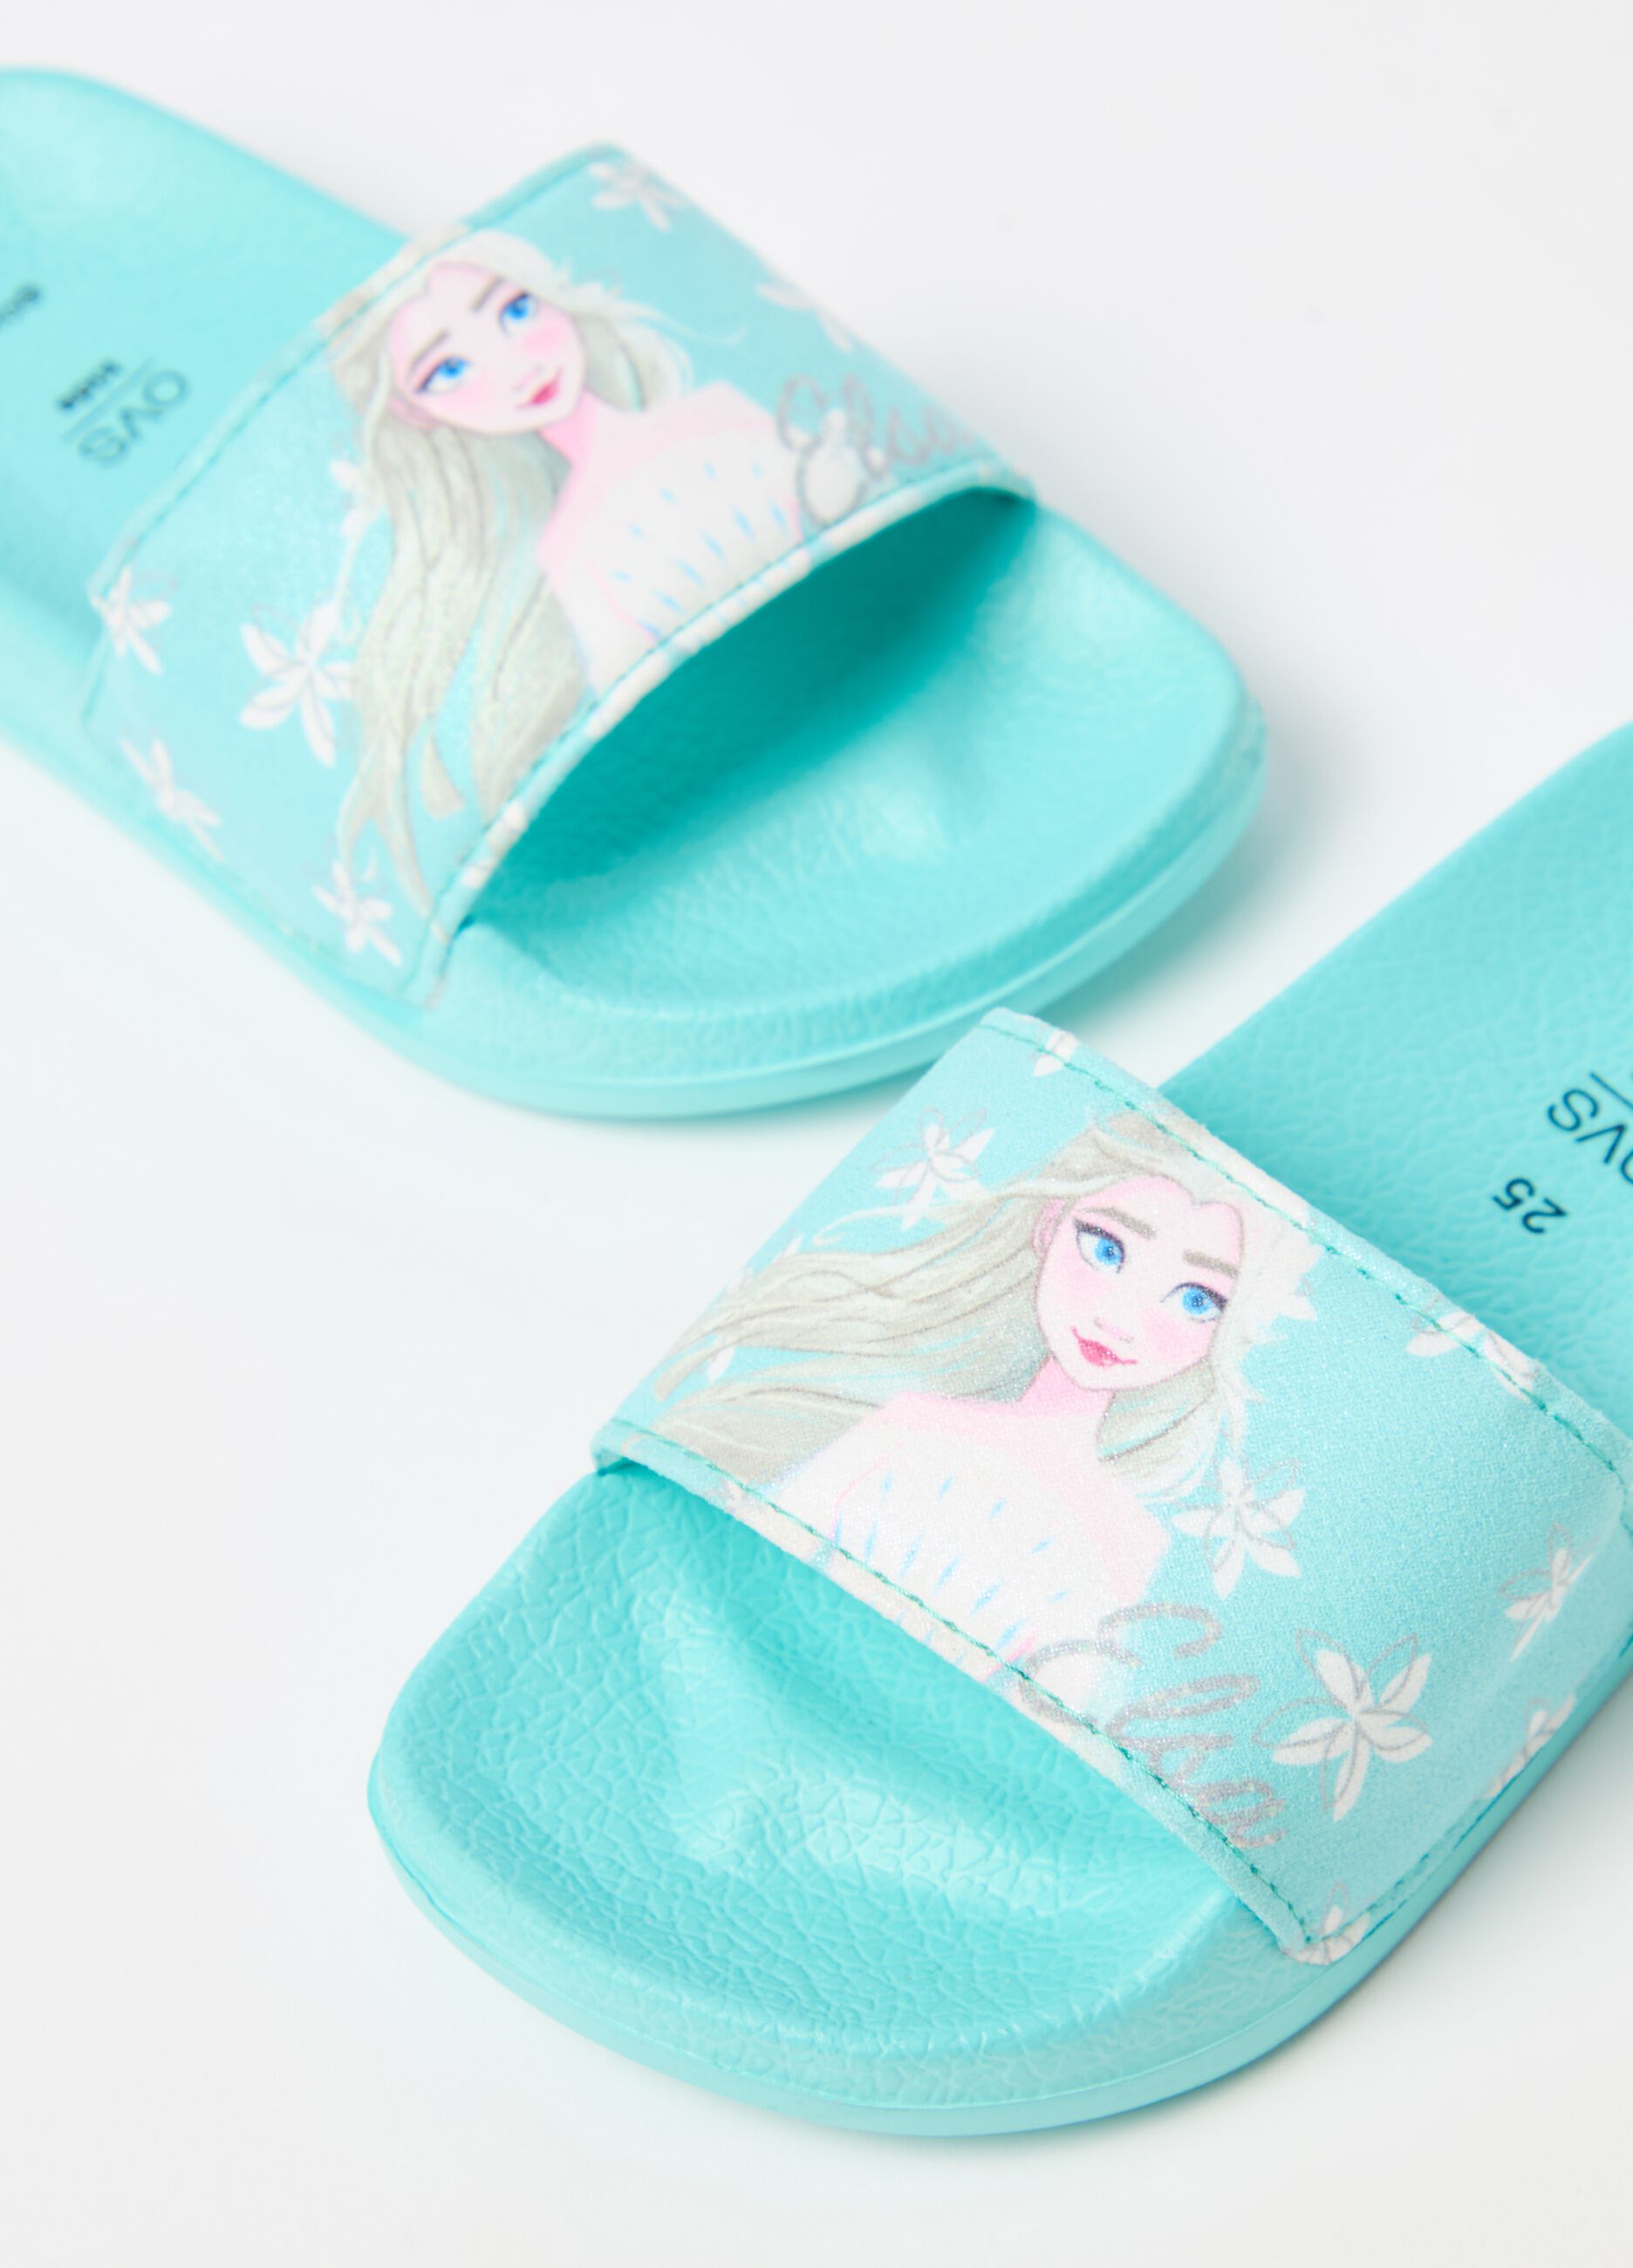 Frozen Elsa slippers